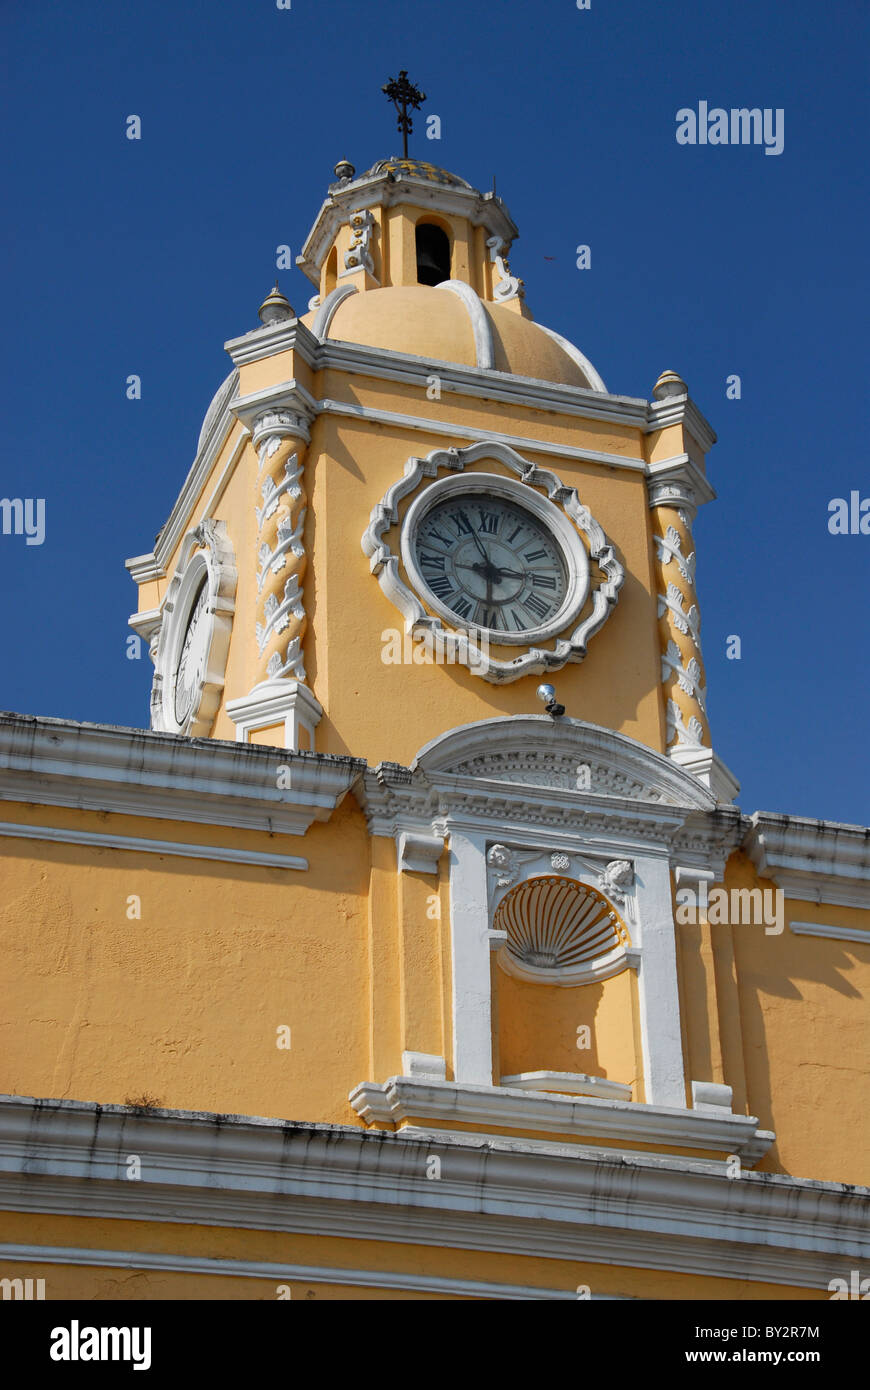 Santa Catalina Arch and clock tower in Antigua, Guatemala Stock Photo